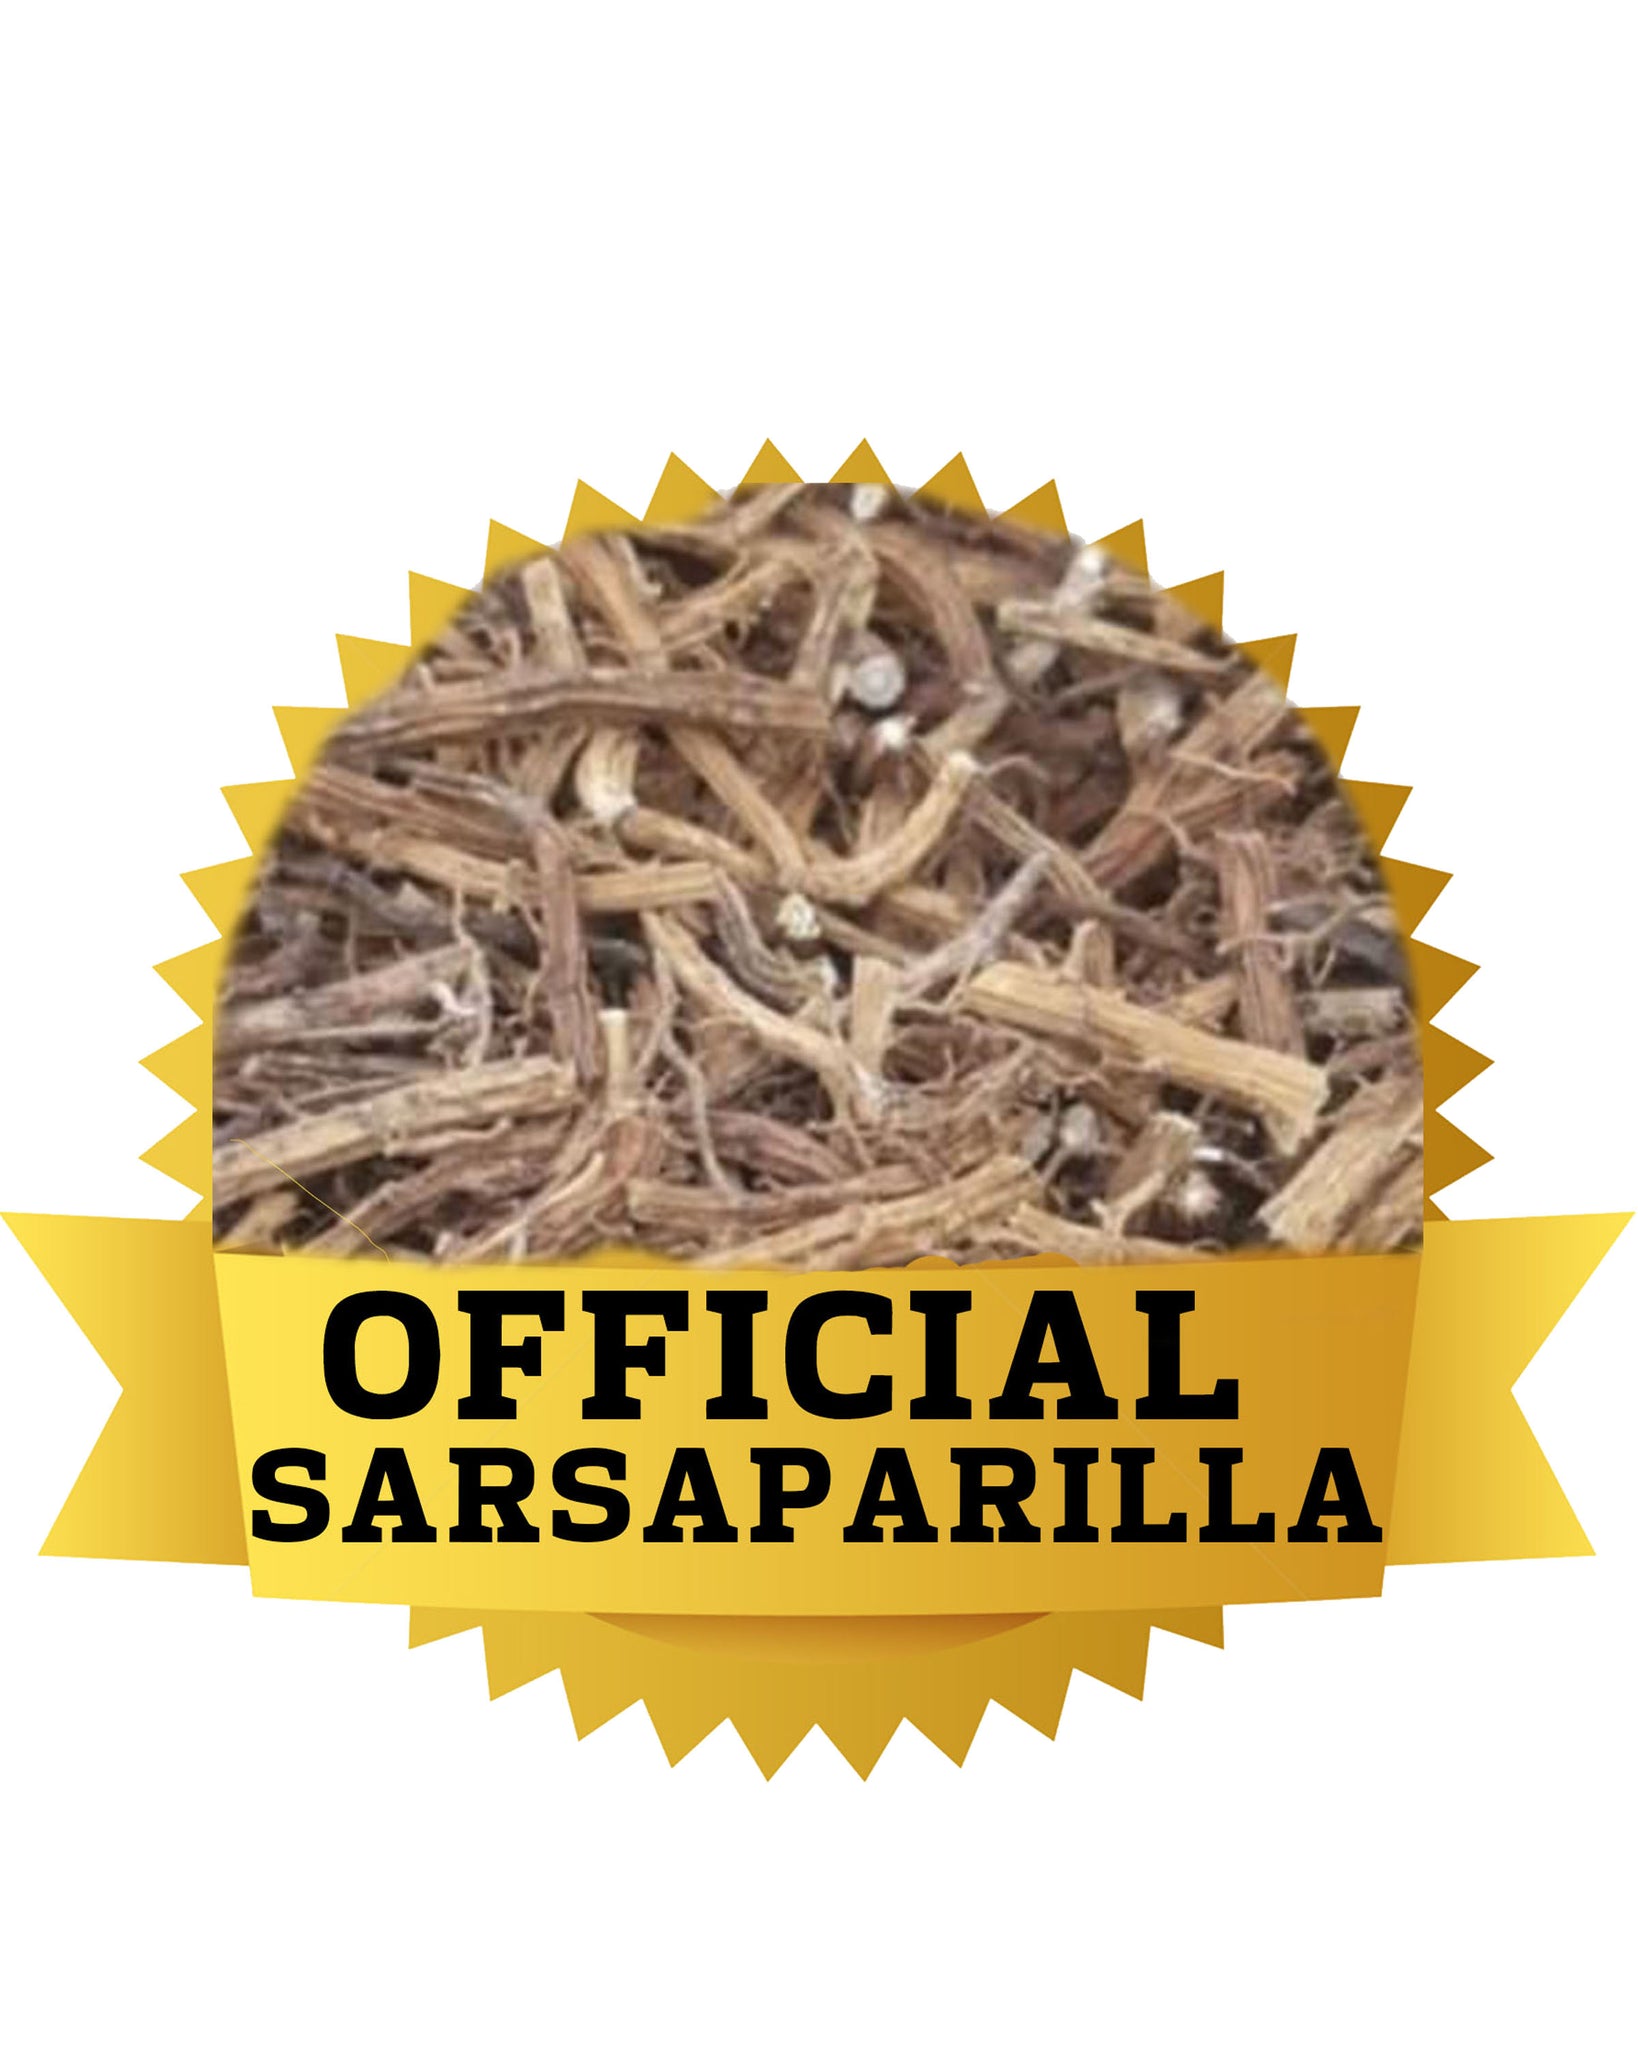 Wild Crafted Panama Sarsaparilla Root